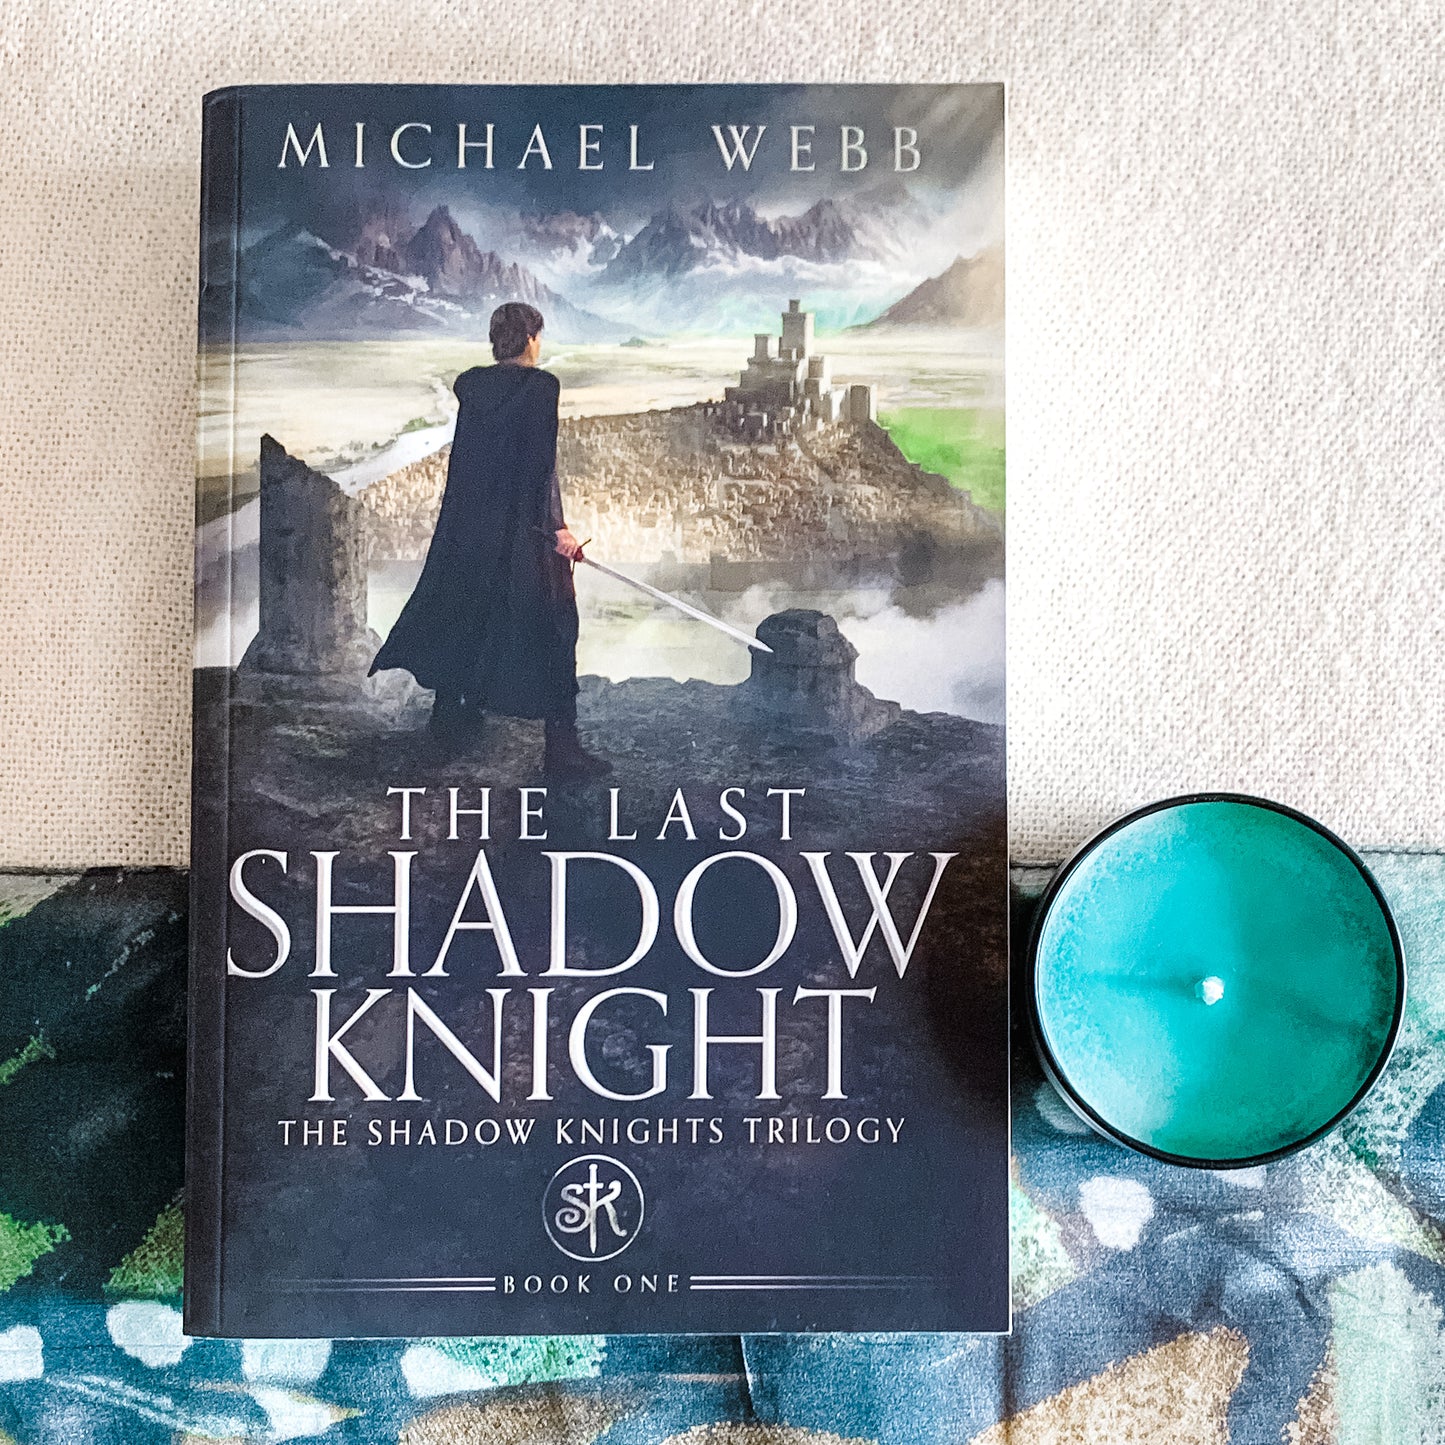 The Last Shadow Knight by Michael Webb